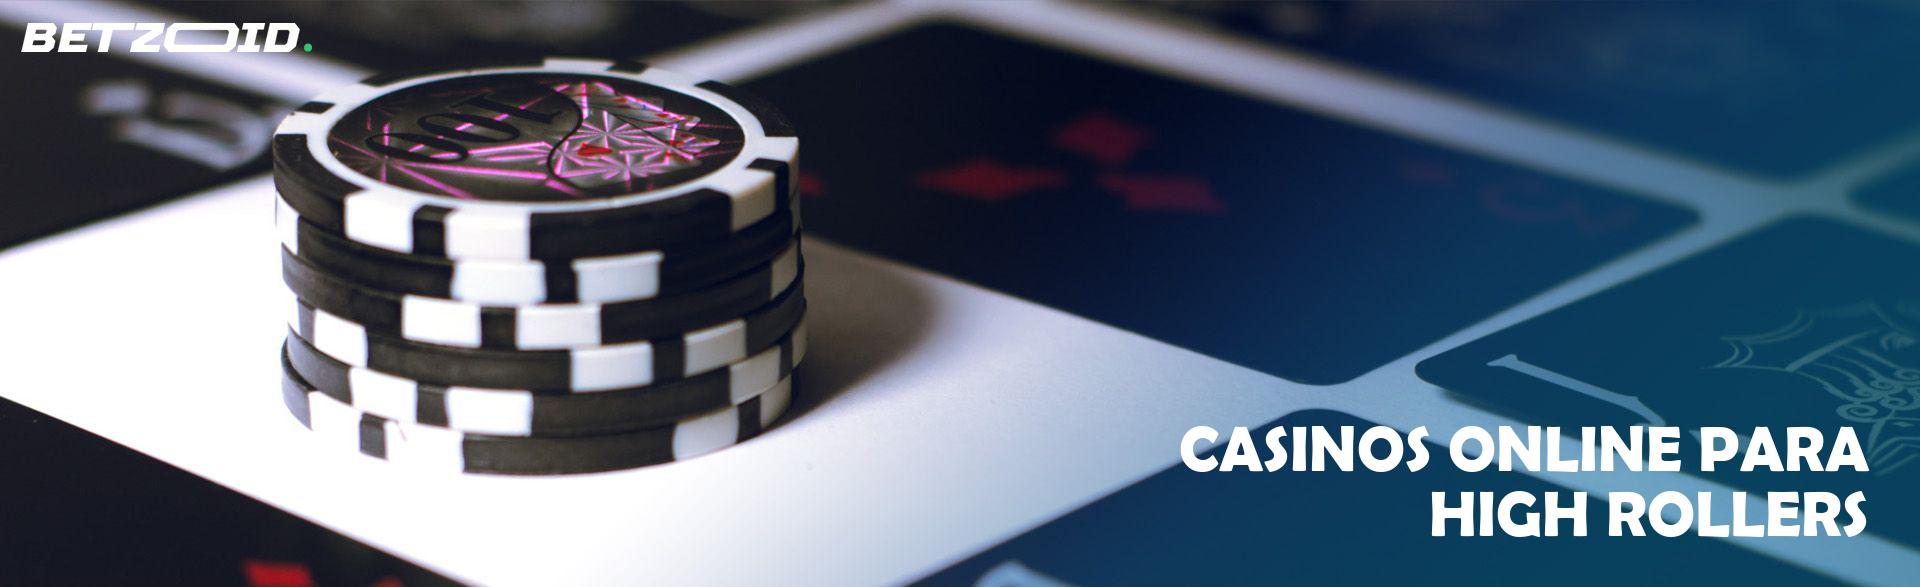 Casinos Online Para High Rollers.